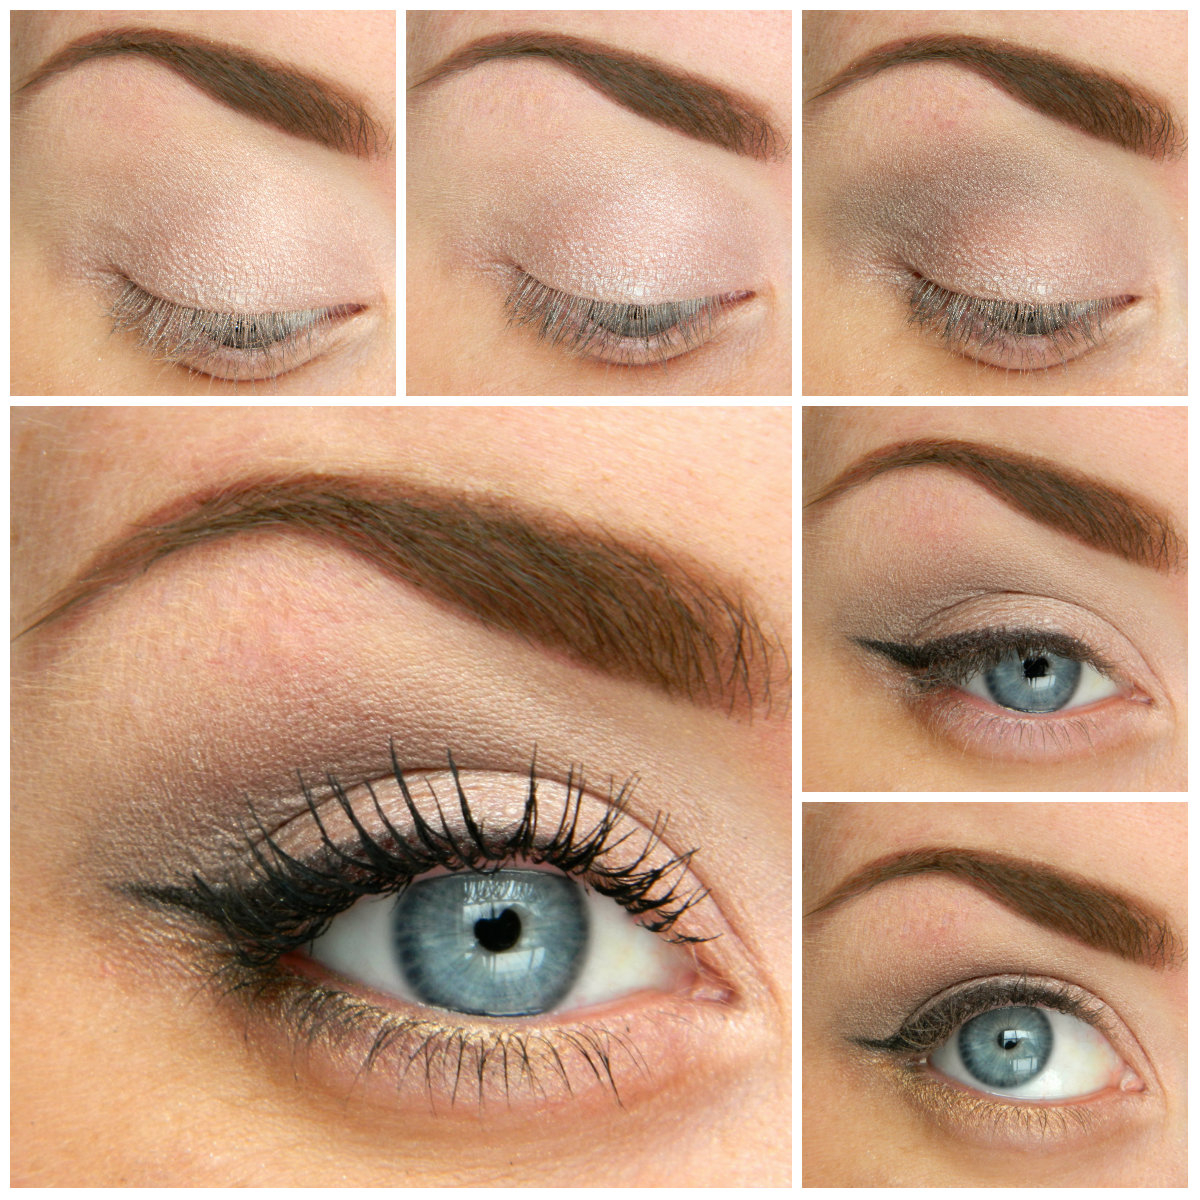 Cute Eye Makeup Ideas 5 Ways To Make Blue Eyes Pop With Proper Eye Makeup Her Style Code